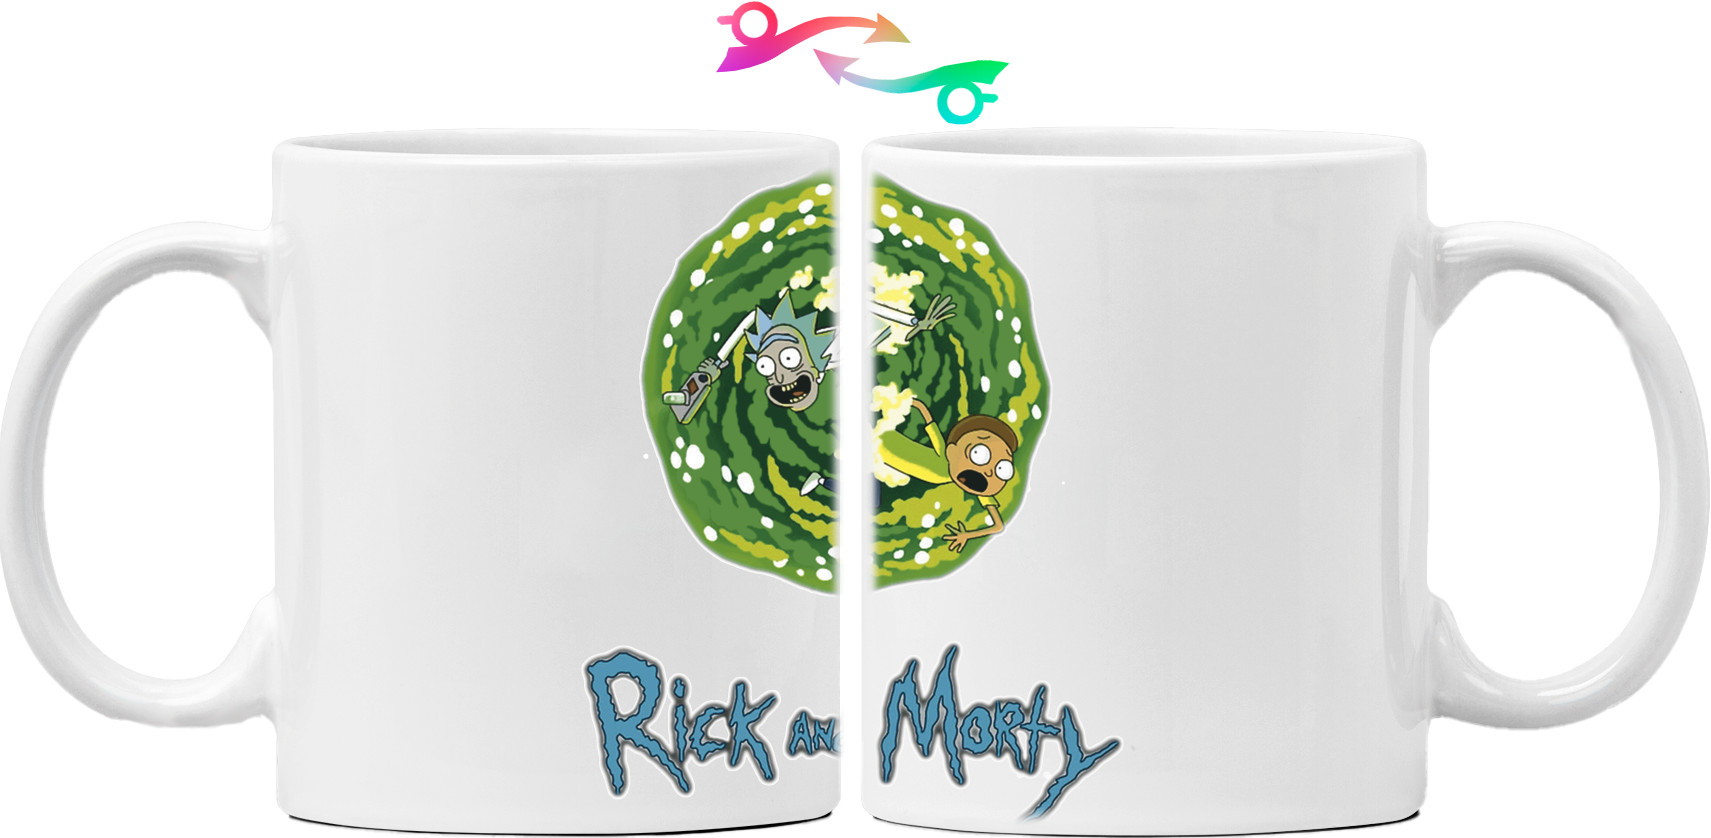 Rick-and-Morty-2